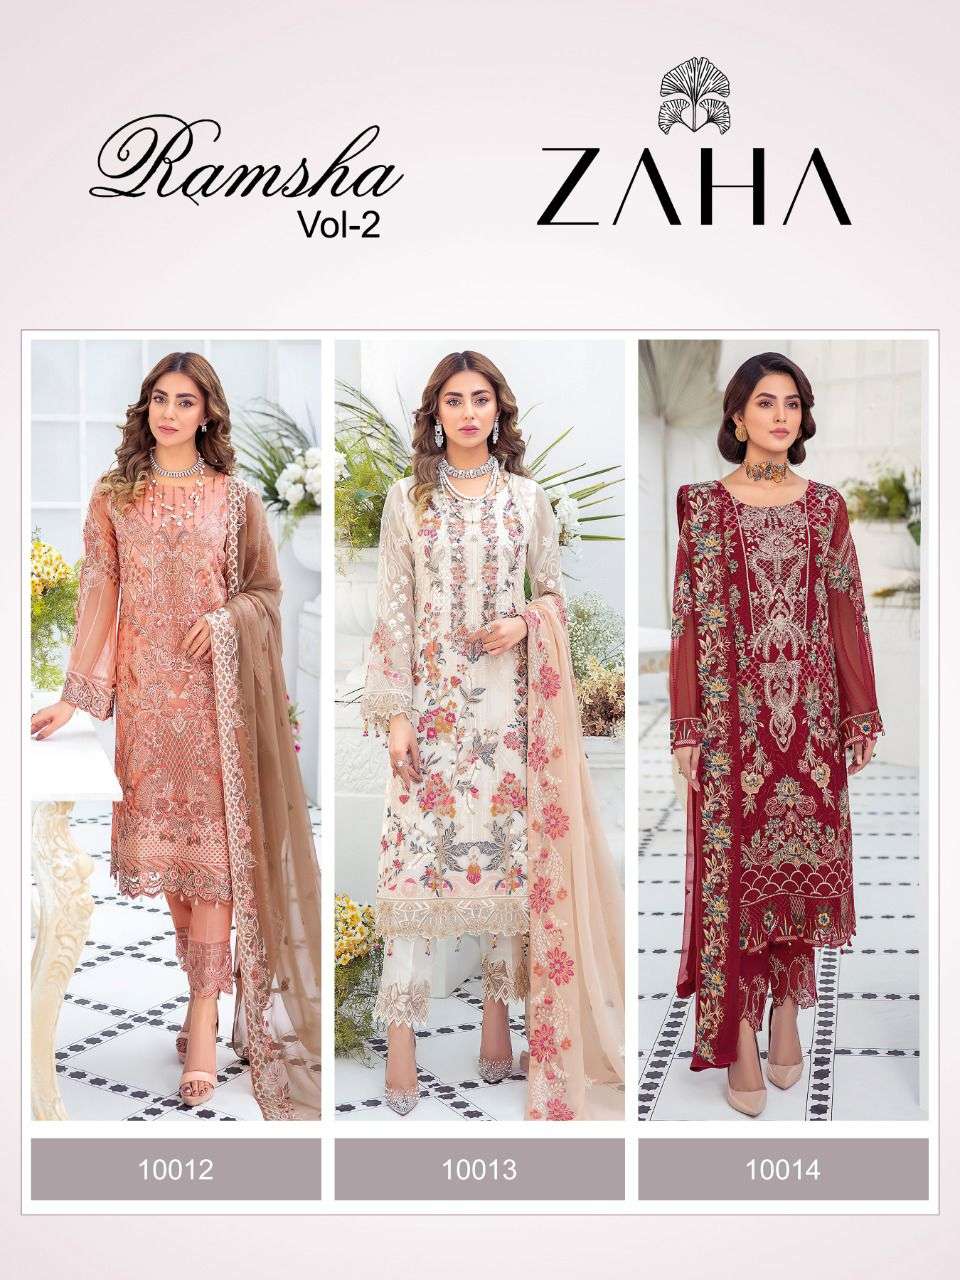 zaha ramsha vol 2 pakistani dress design in embroidery